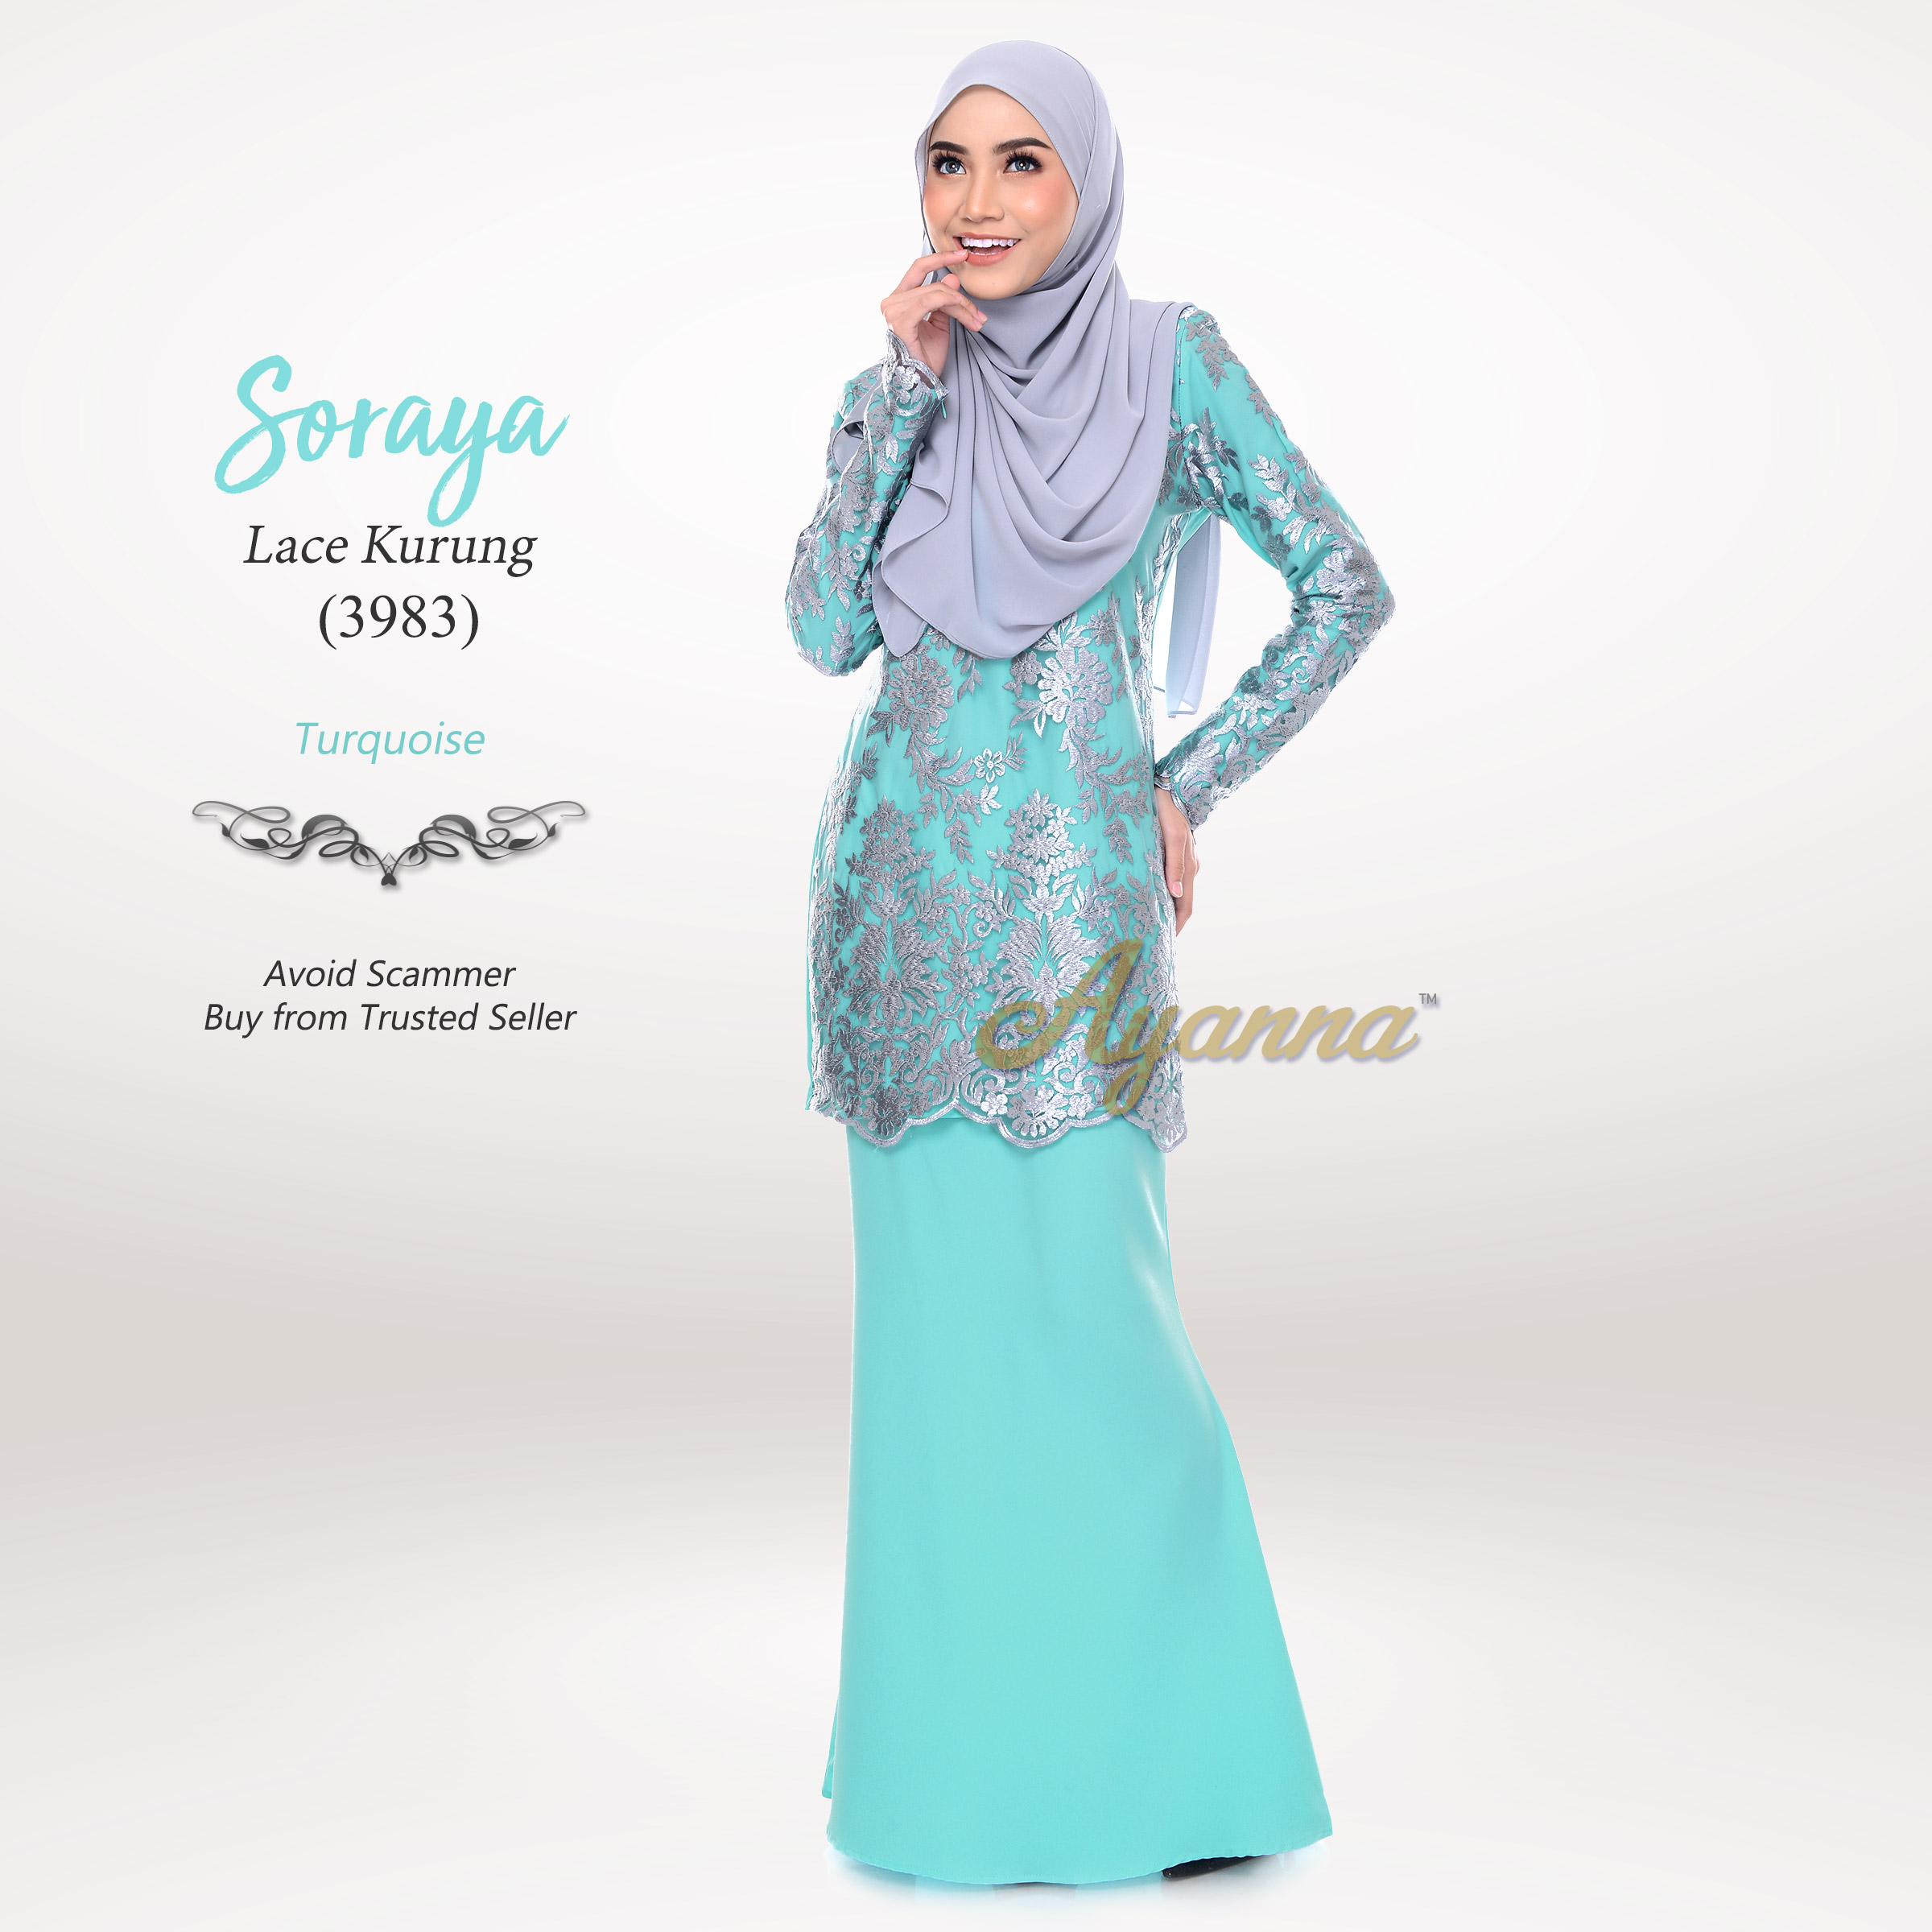 Soraya Lace Kurung 3983 (Turquoise)